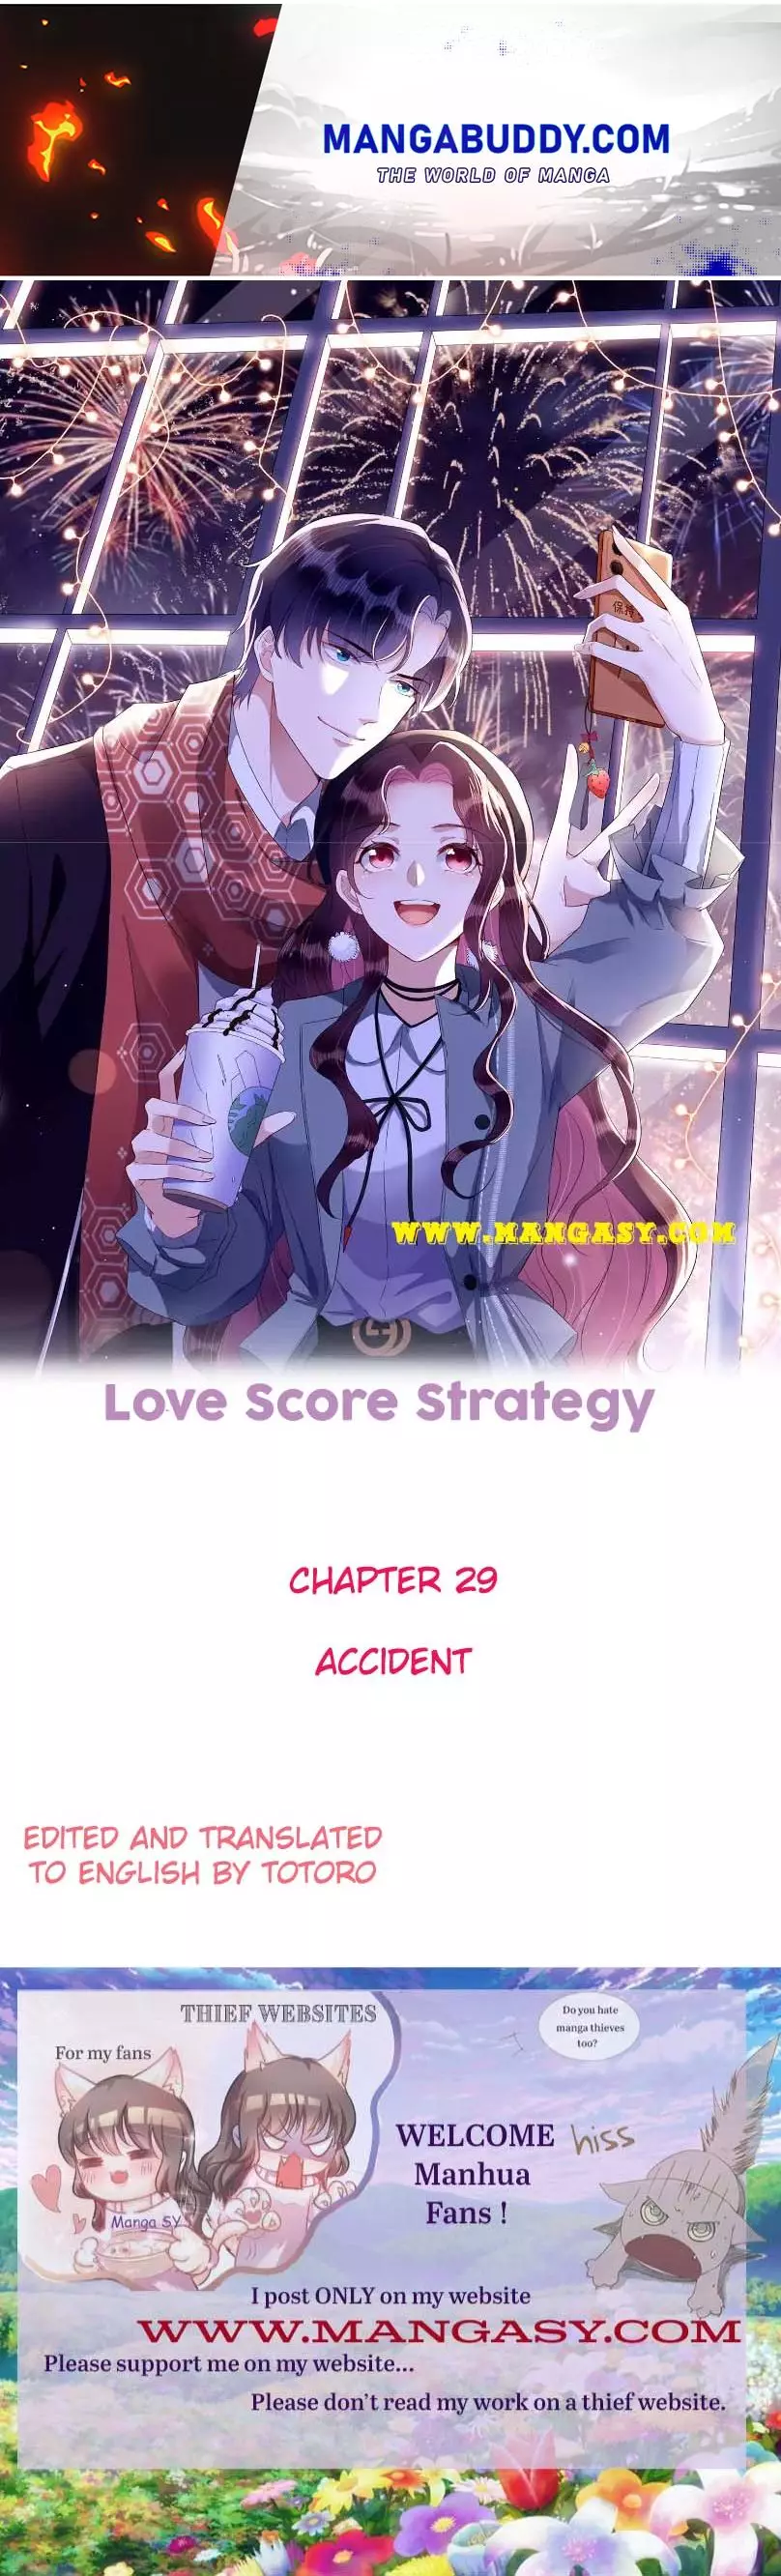 Love Score Strategy - 29 page 1-9423a9f3